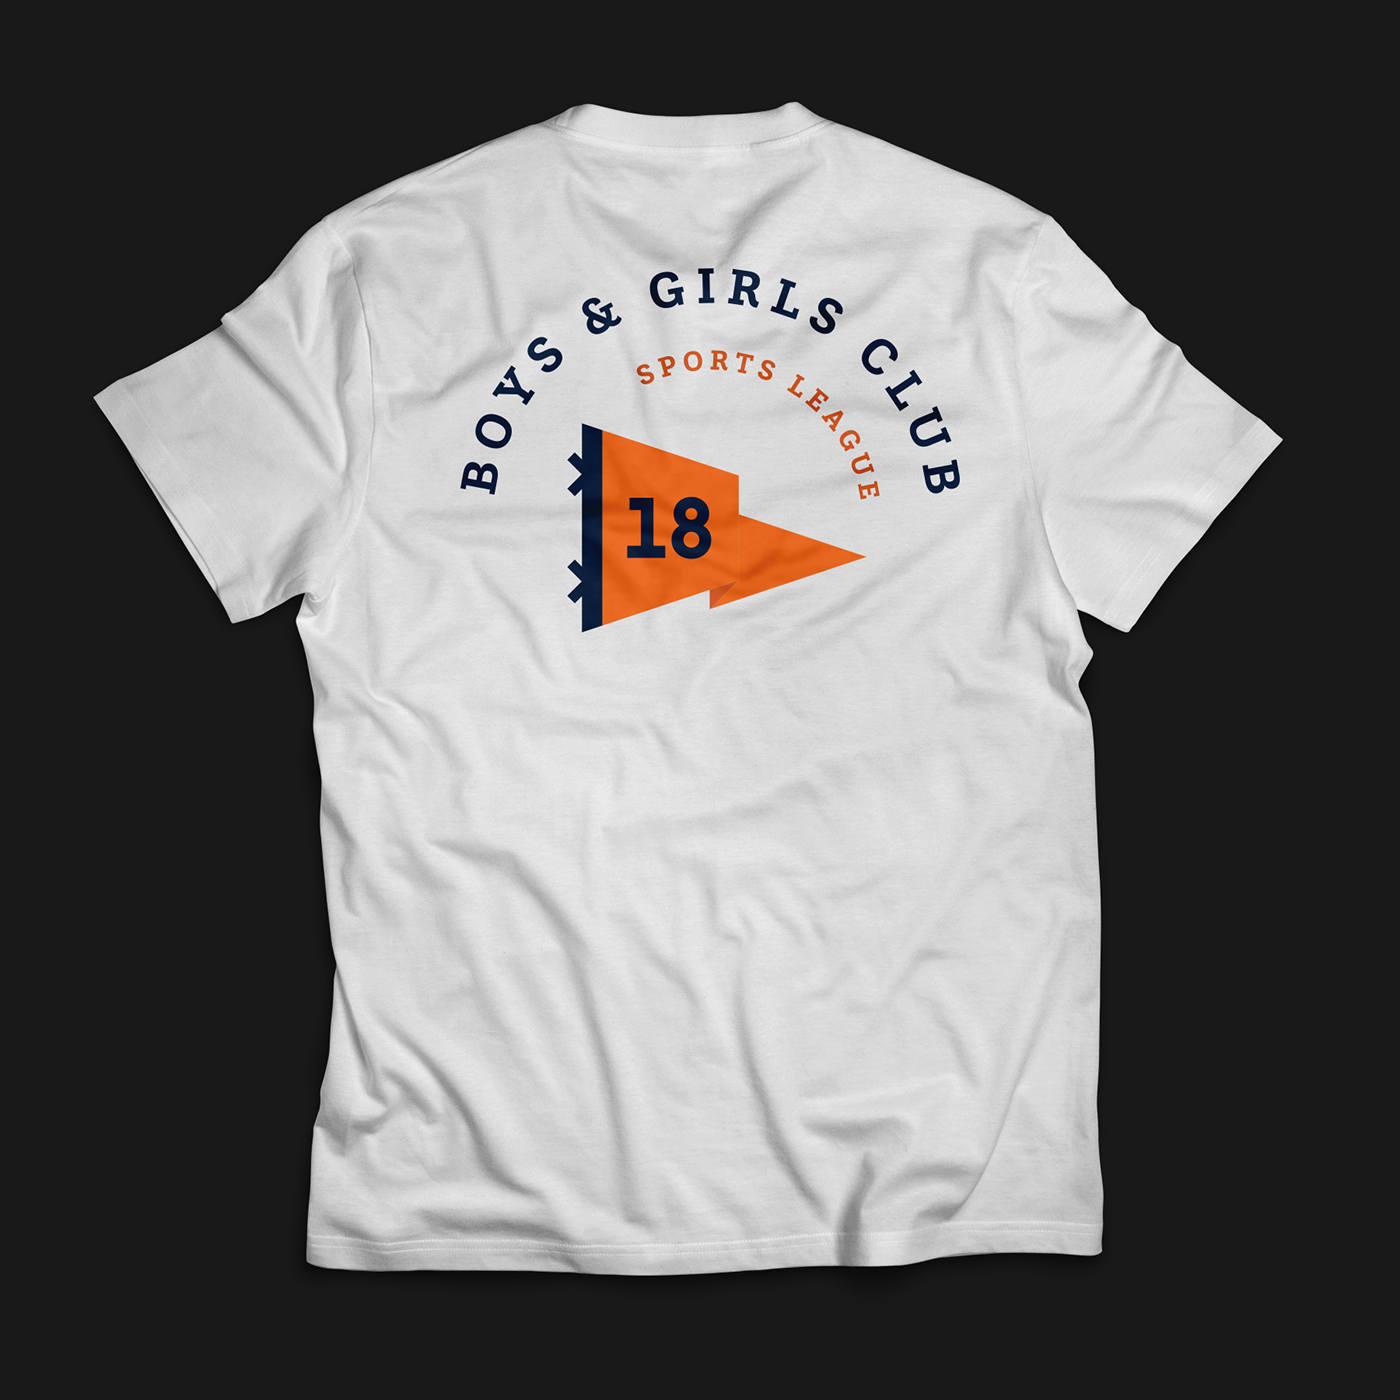 bys & girls club sports league shirt graphic brand radesigner Cbus ohio